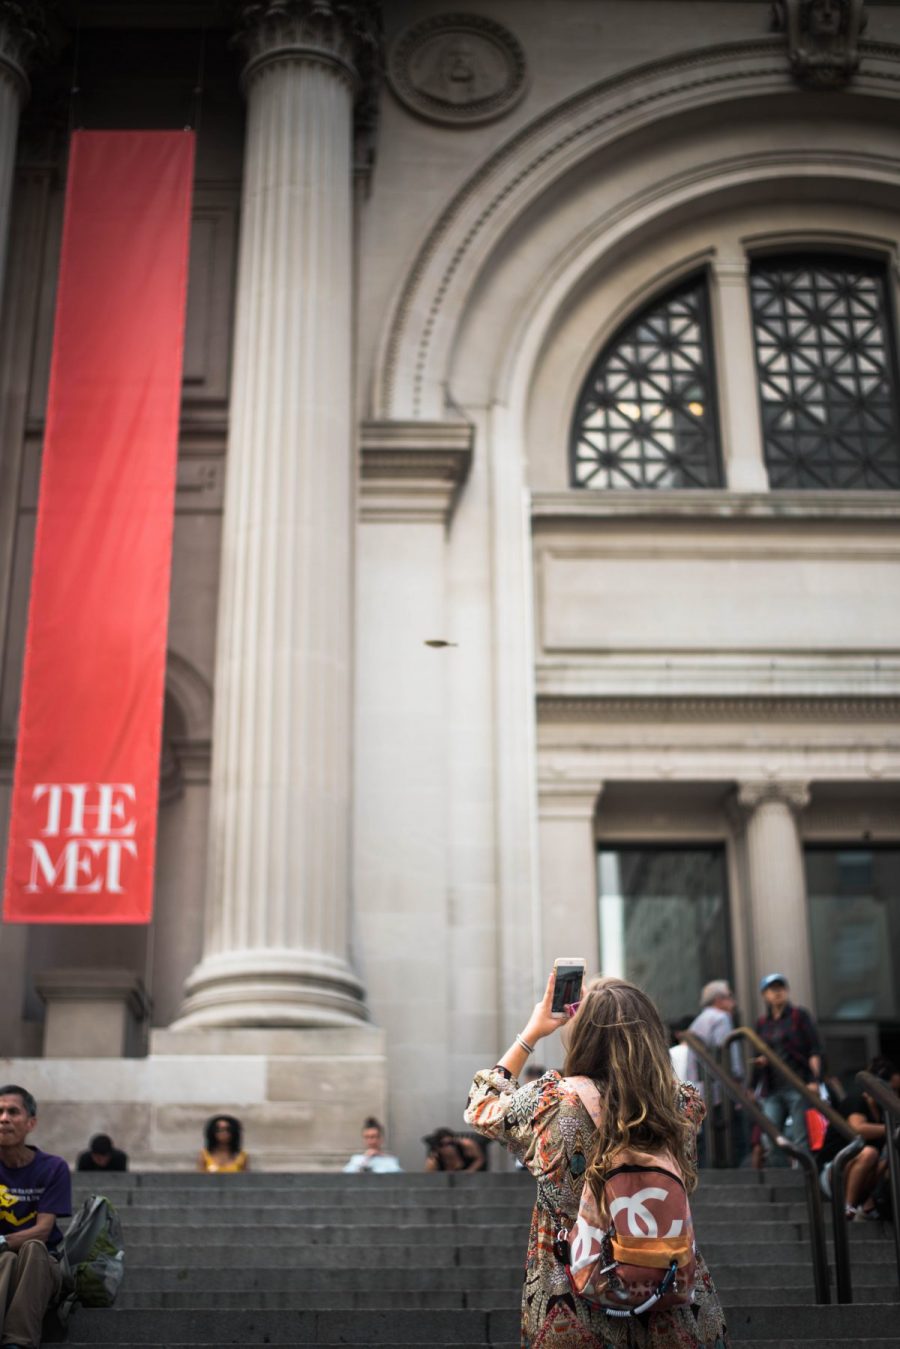 met museum of art New York travel blogger